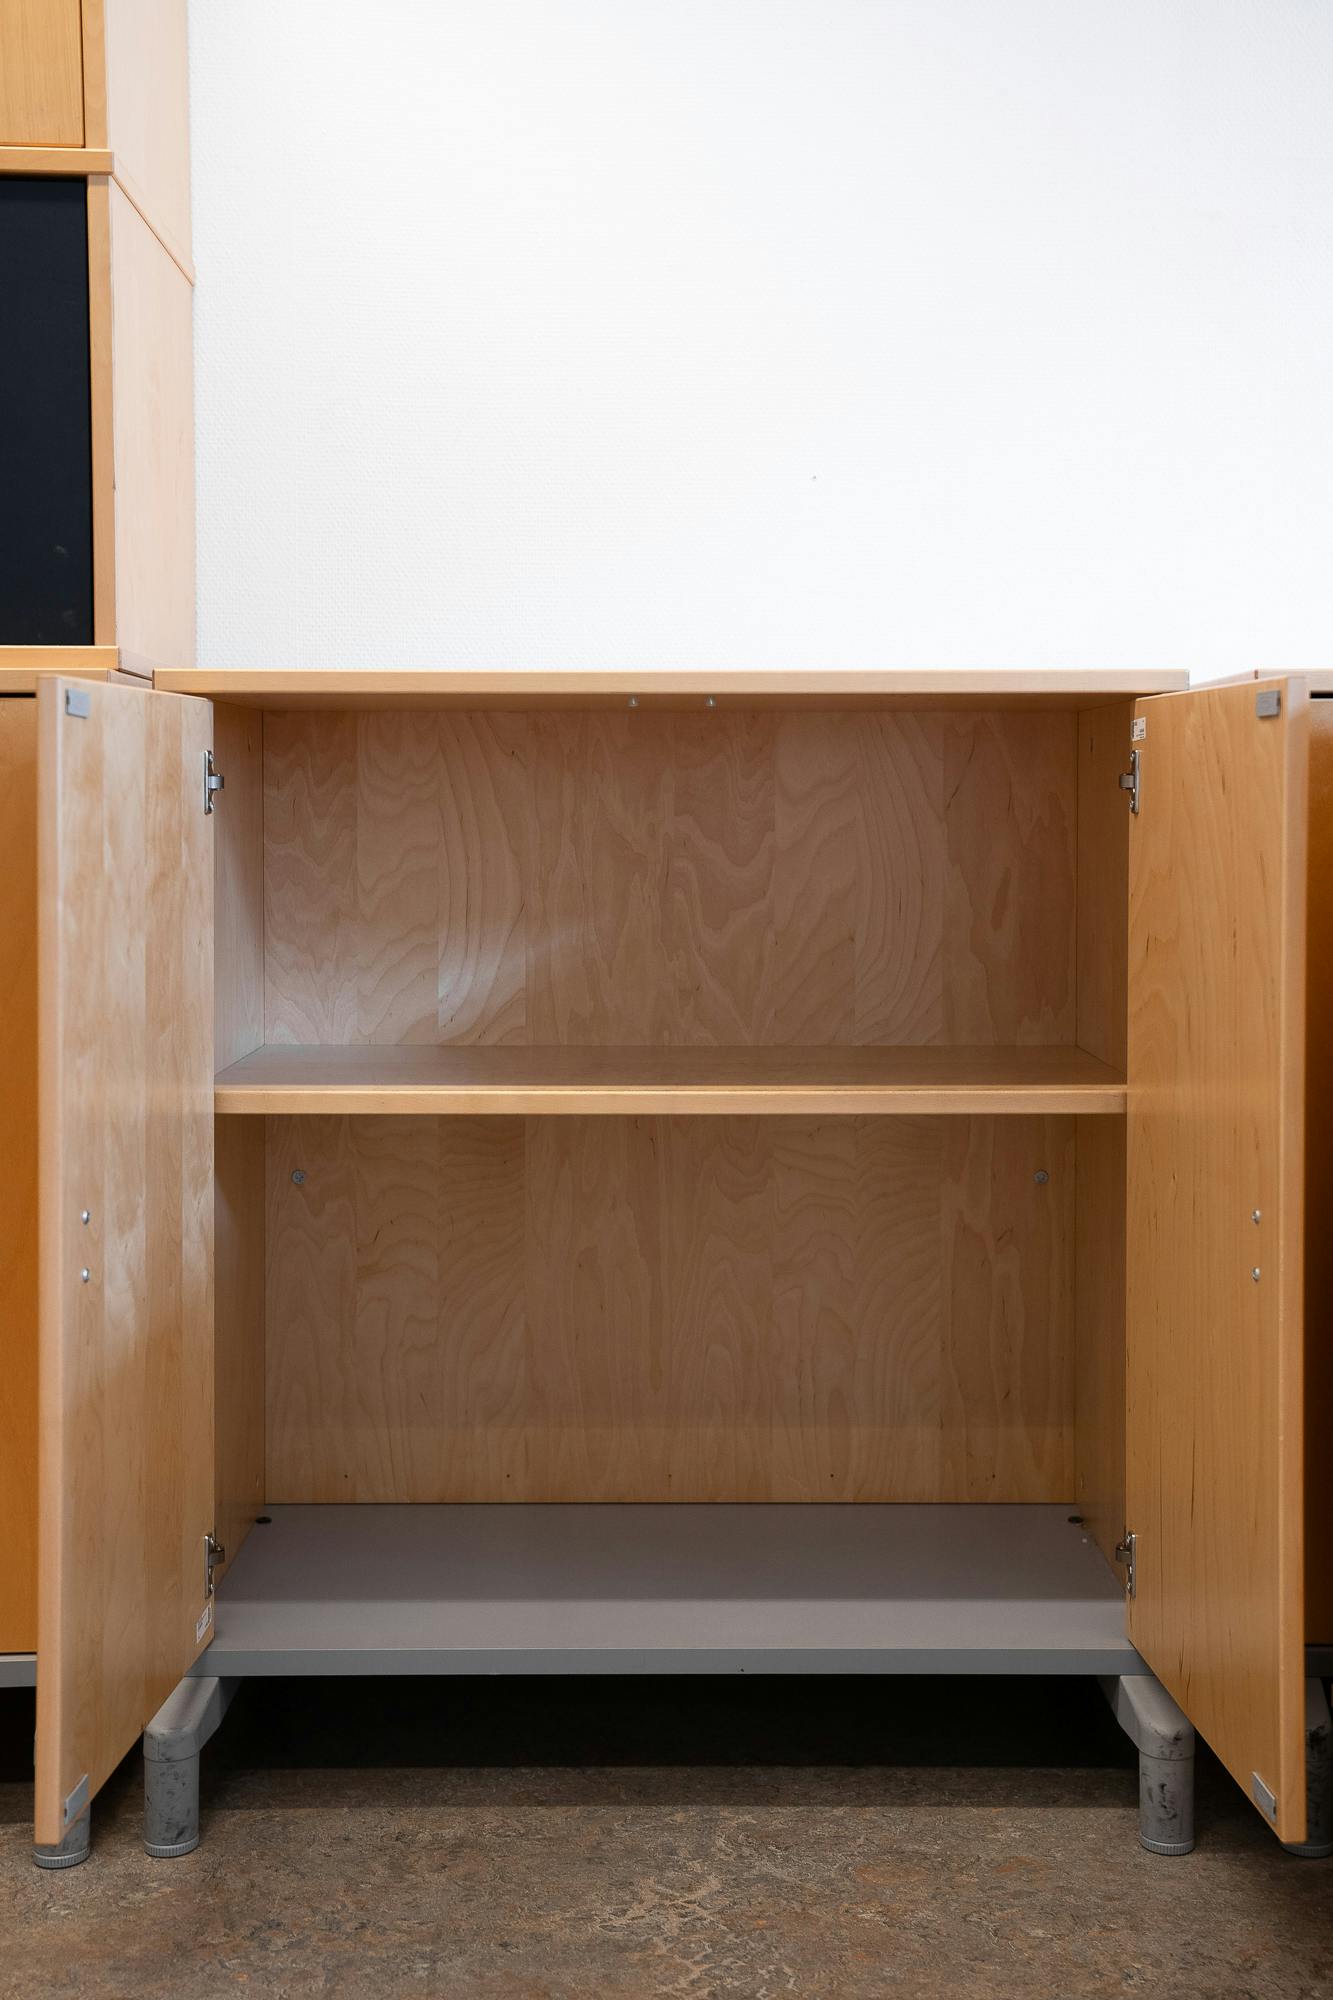 ikea modular wooden storage cabinet - Second hand quality "Storage" - Relieve Furniture